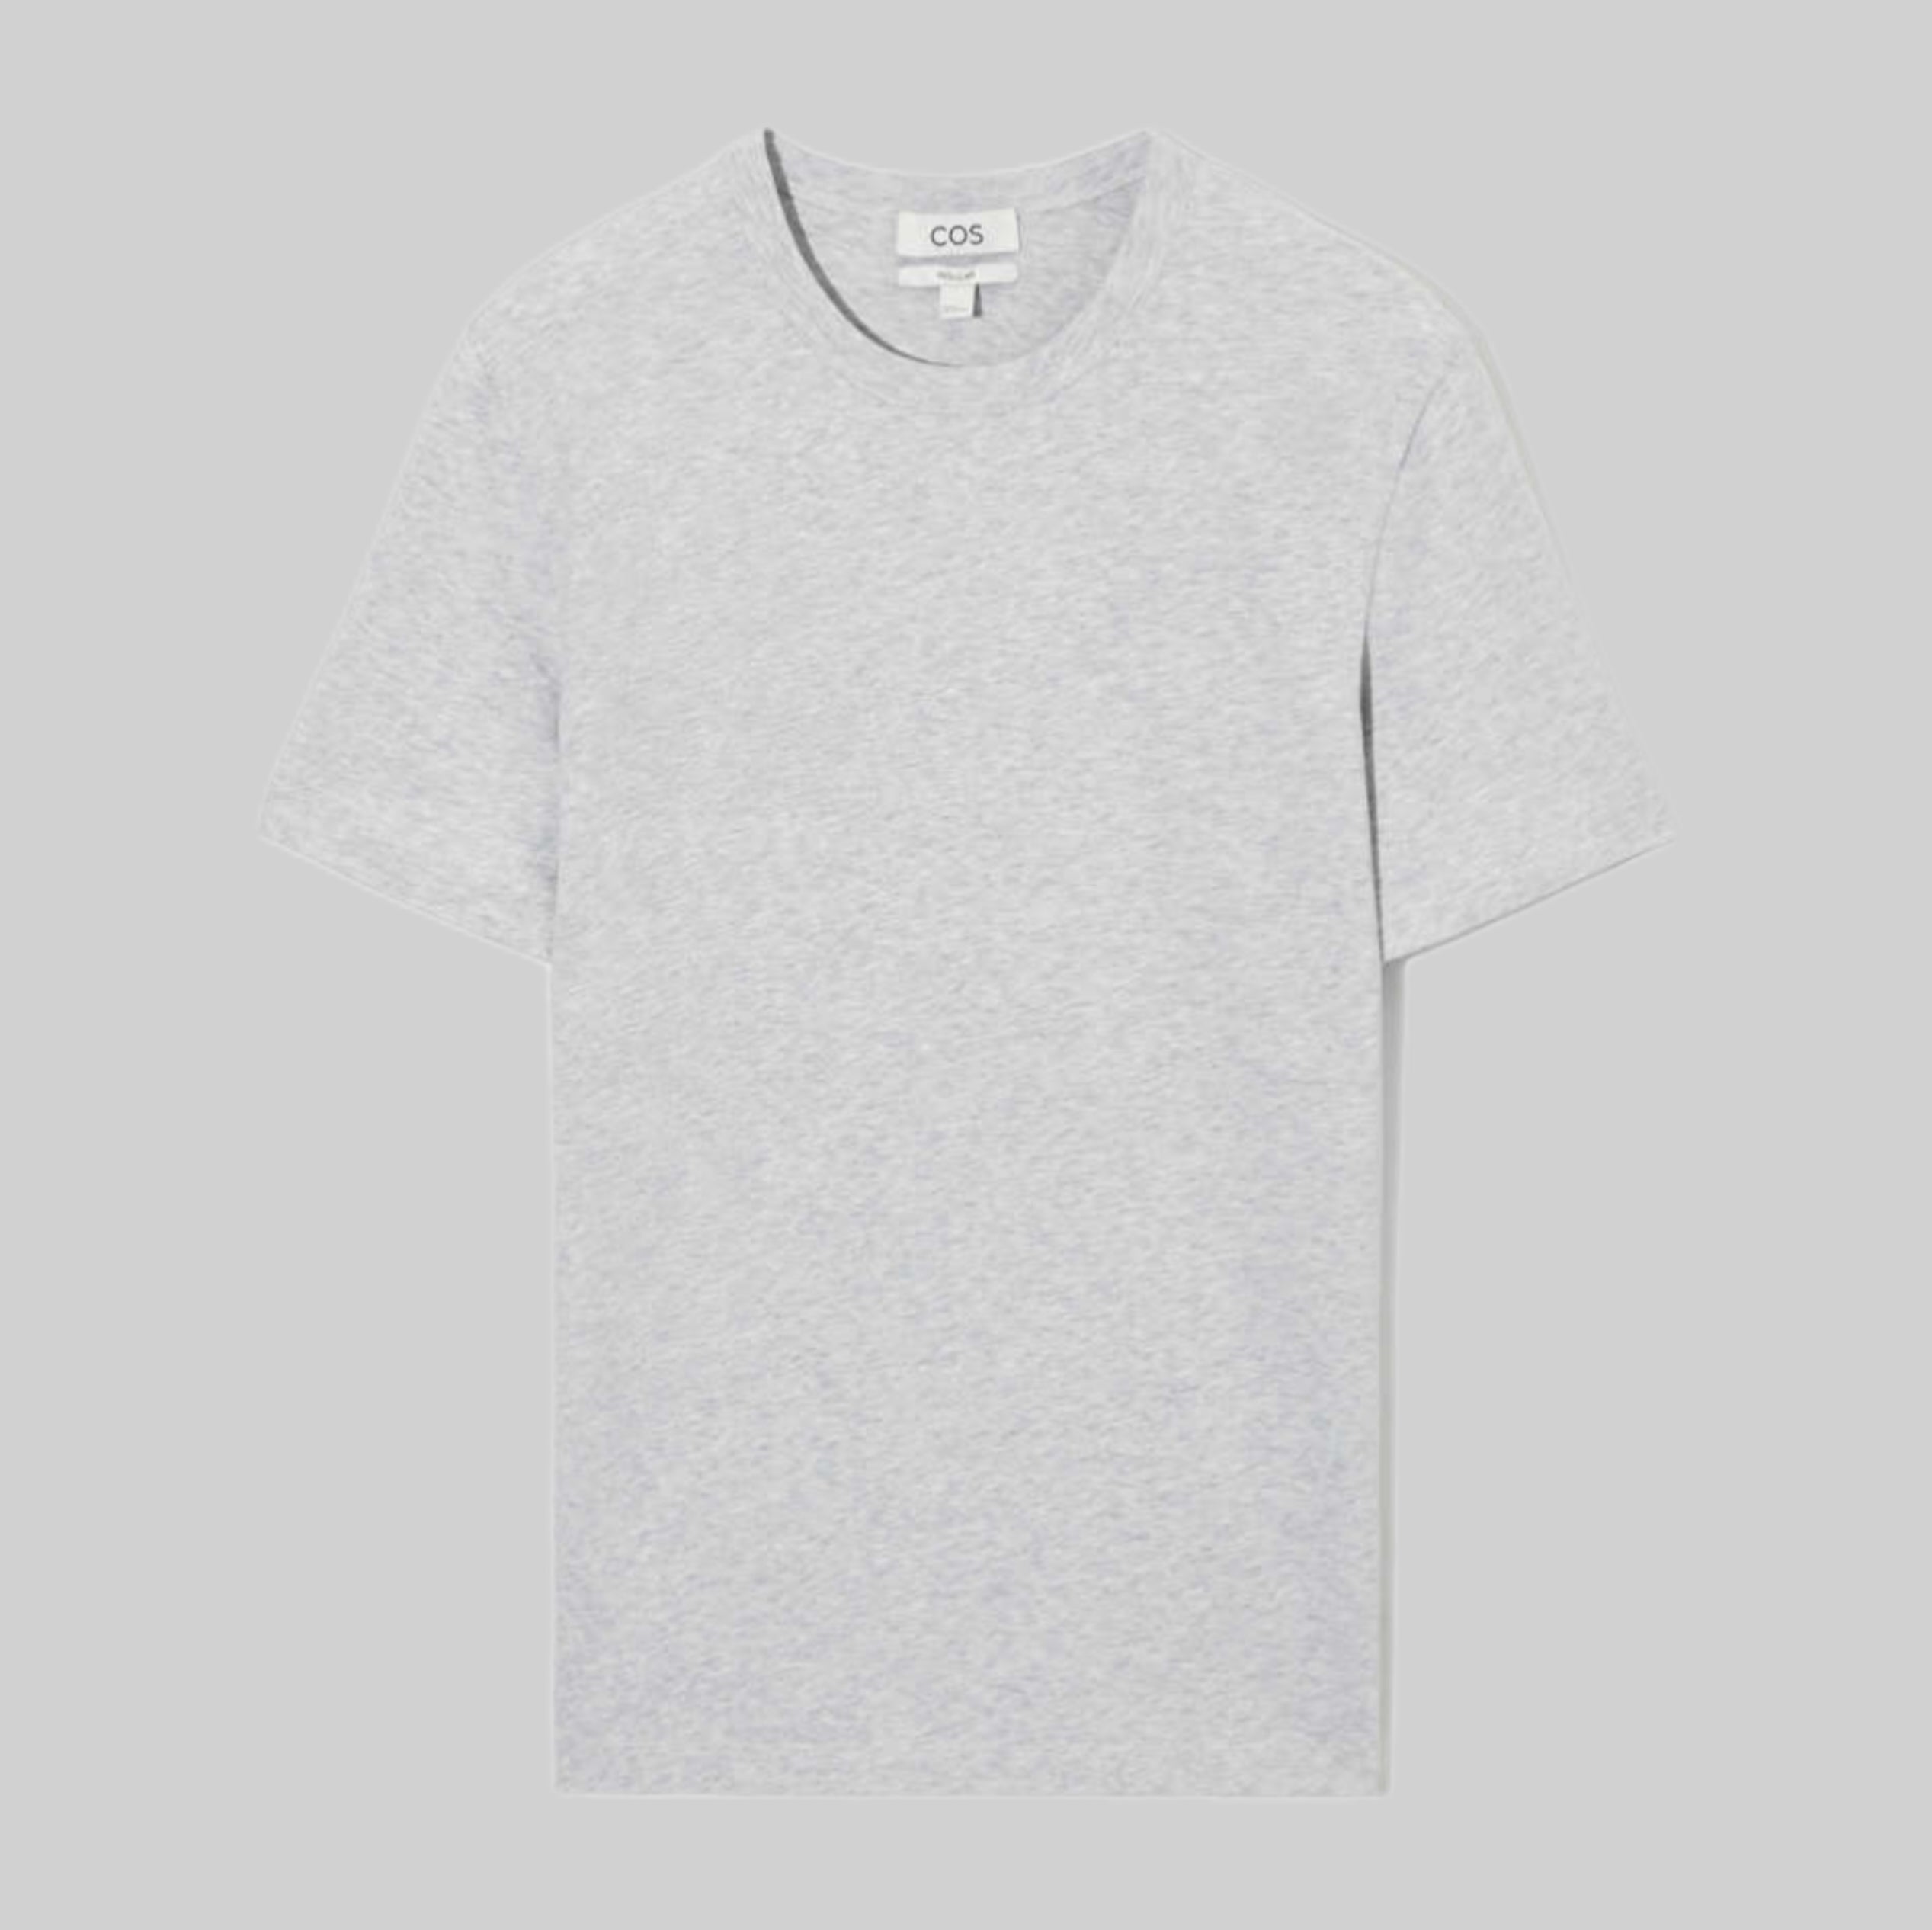 cos t-shirt, gray, men, frontside